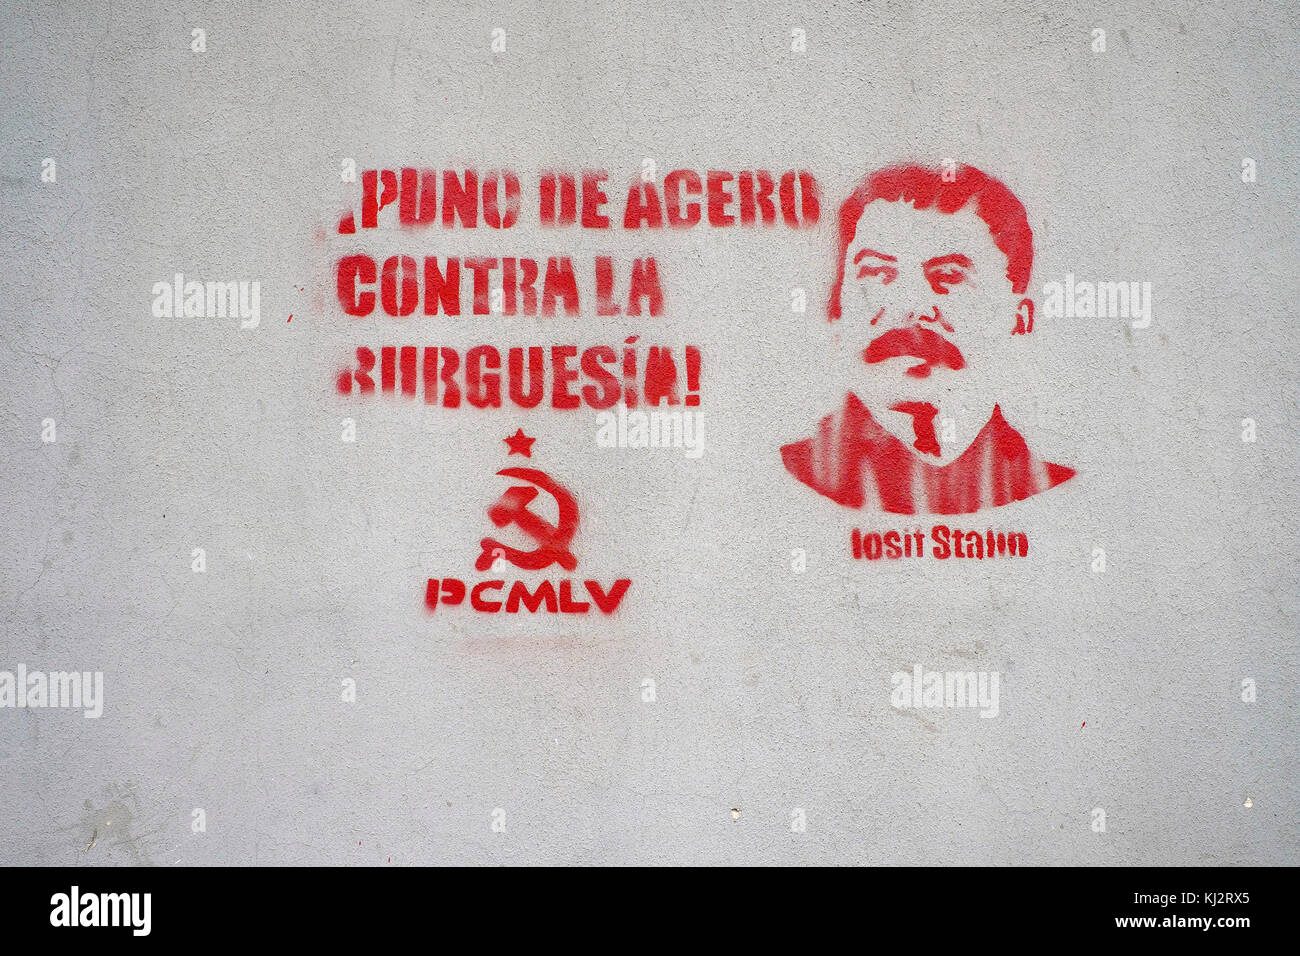 Venezuela, Santiago de Le—n de Caracas: mural painting in the city depicting Stalin with the slogan 'Puno de acero contra la burguesia', a steel fist  Stock Photo